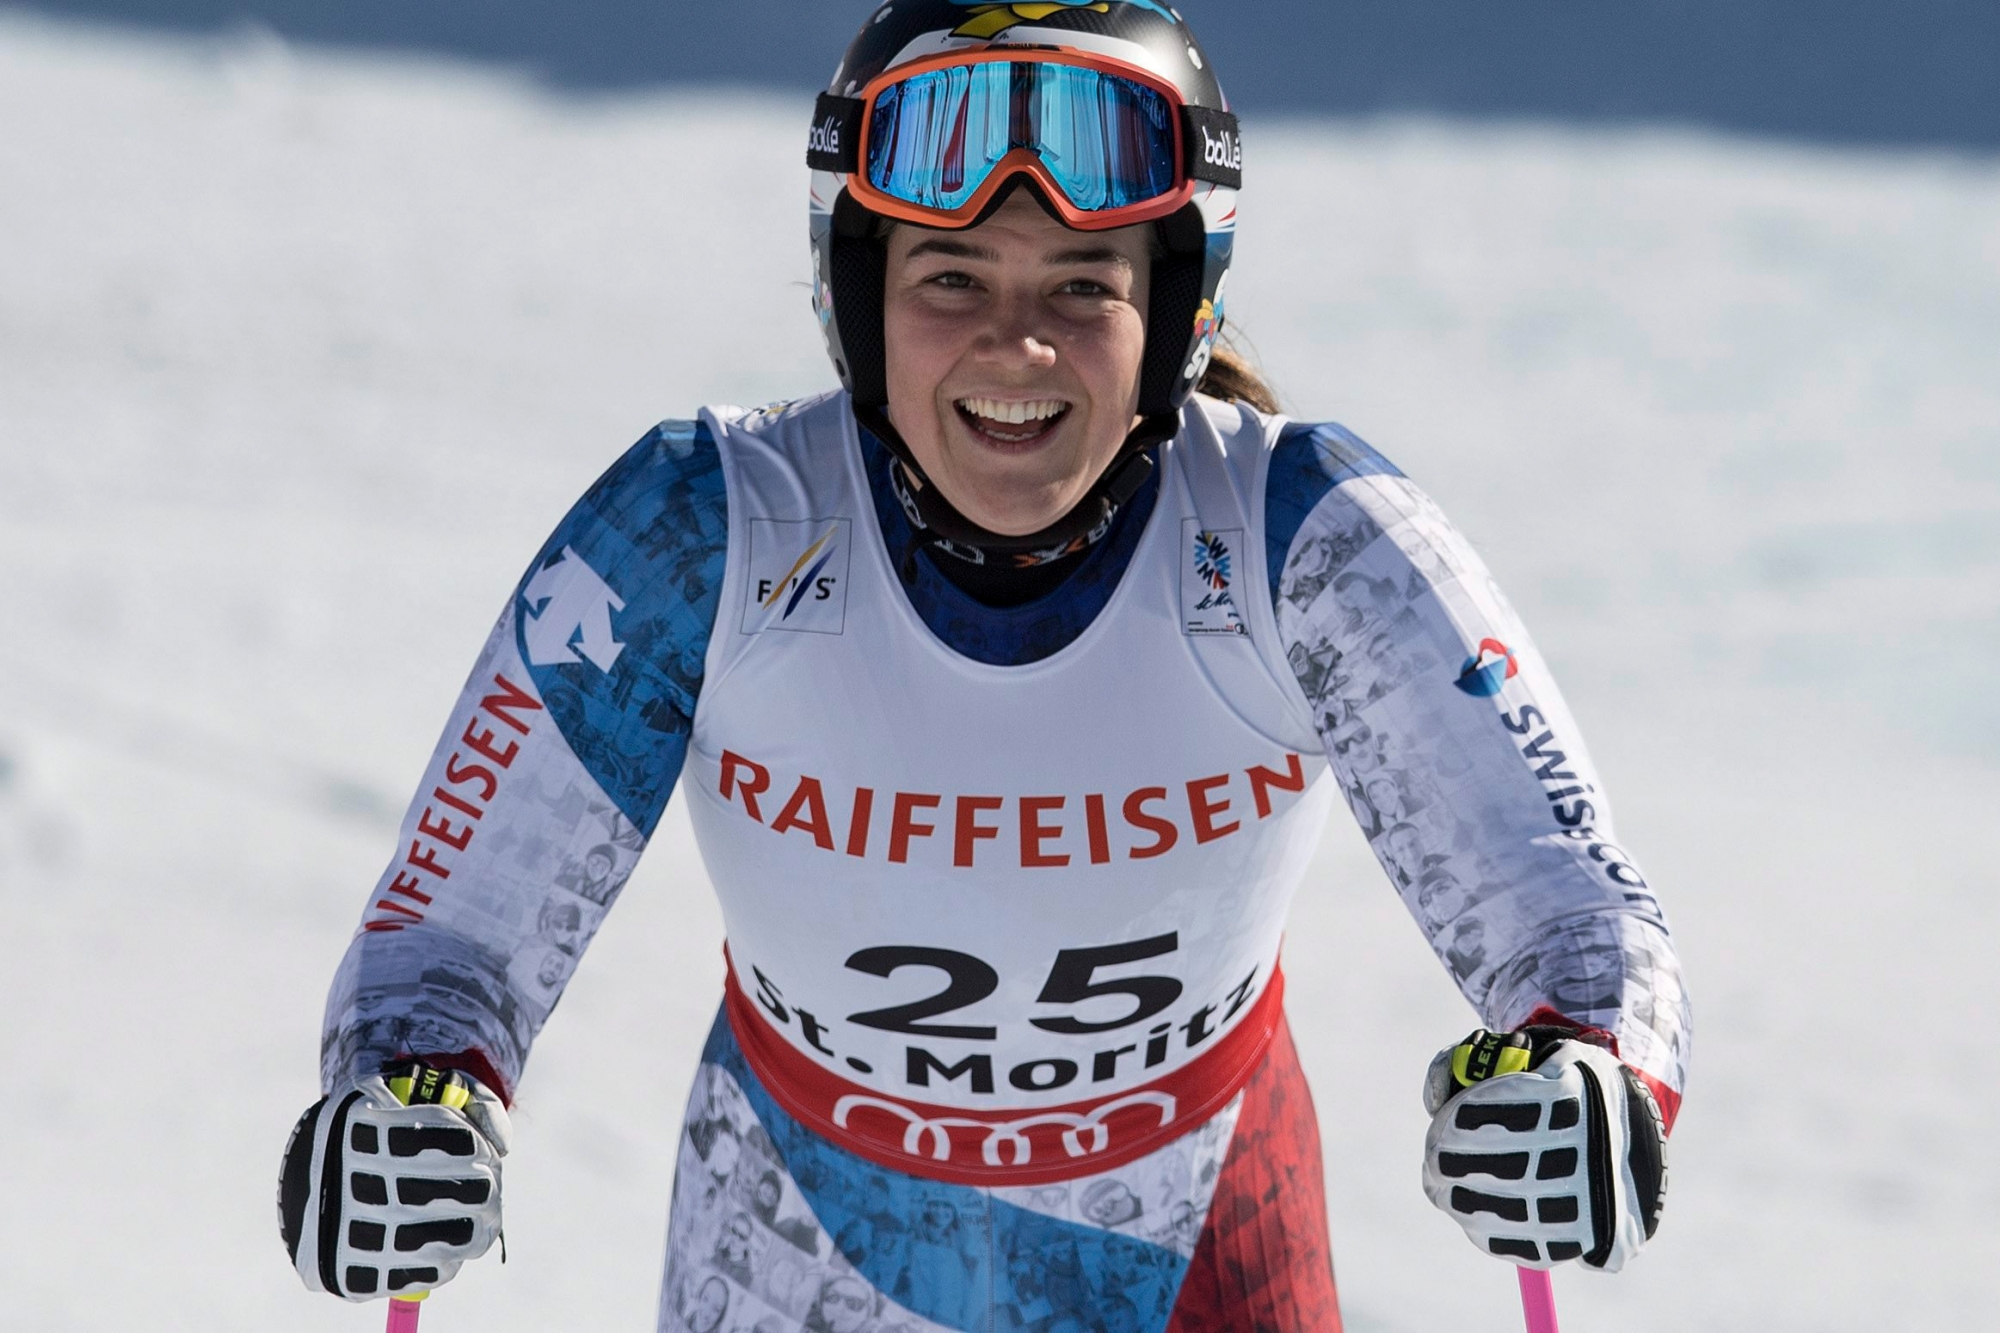 Melanie Meillard of Switzerland reacts in the finish area during the first run of the women's Giant Slalom race at the 2017 FIS Alpine Skiing World Championships in St. Moritz, Switzerland, Thursday, February 16, 2017. (KEYSTONE/Peter Schneider) SWITZERLAND ALPINE SKIING WORLDS WOMEN GIANT SLALOM